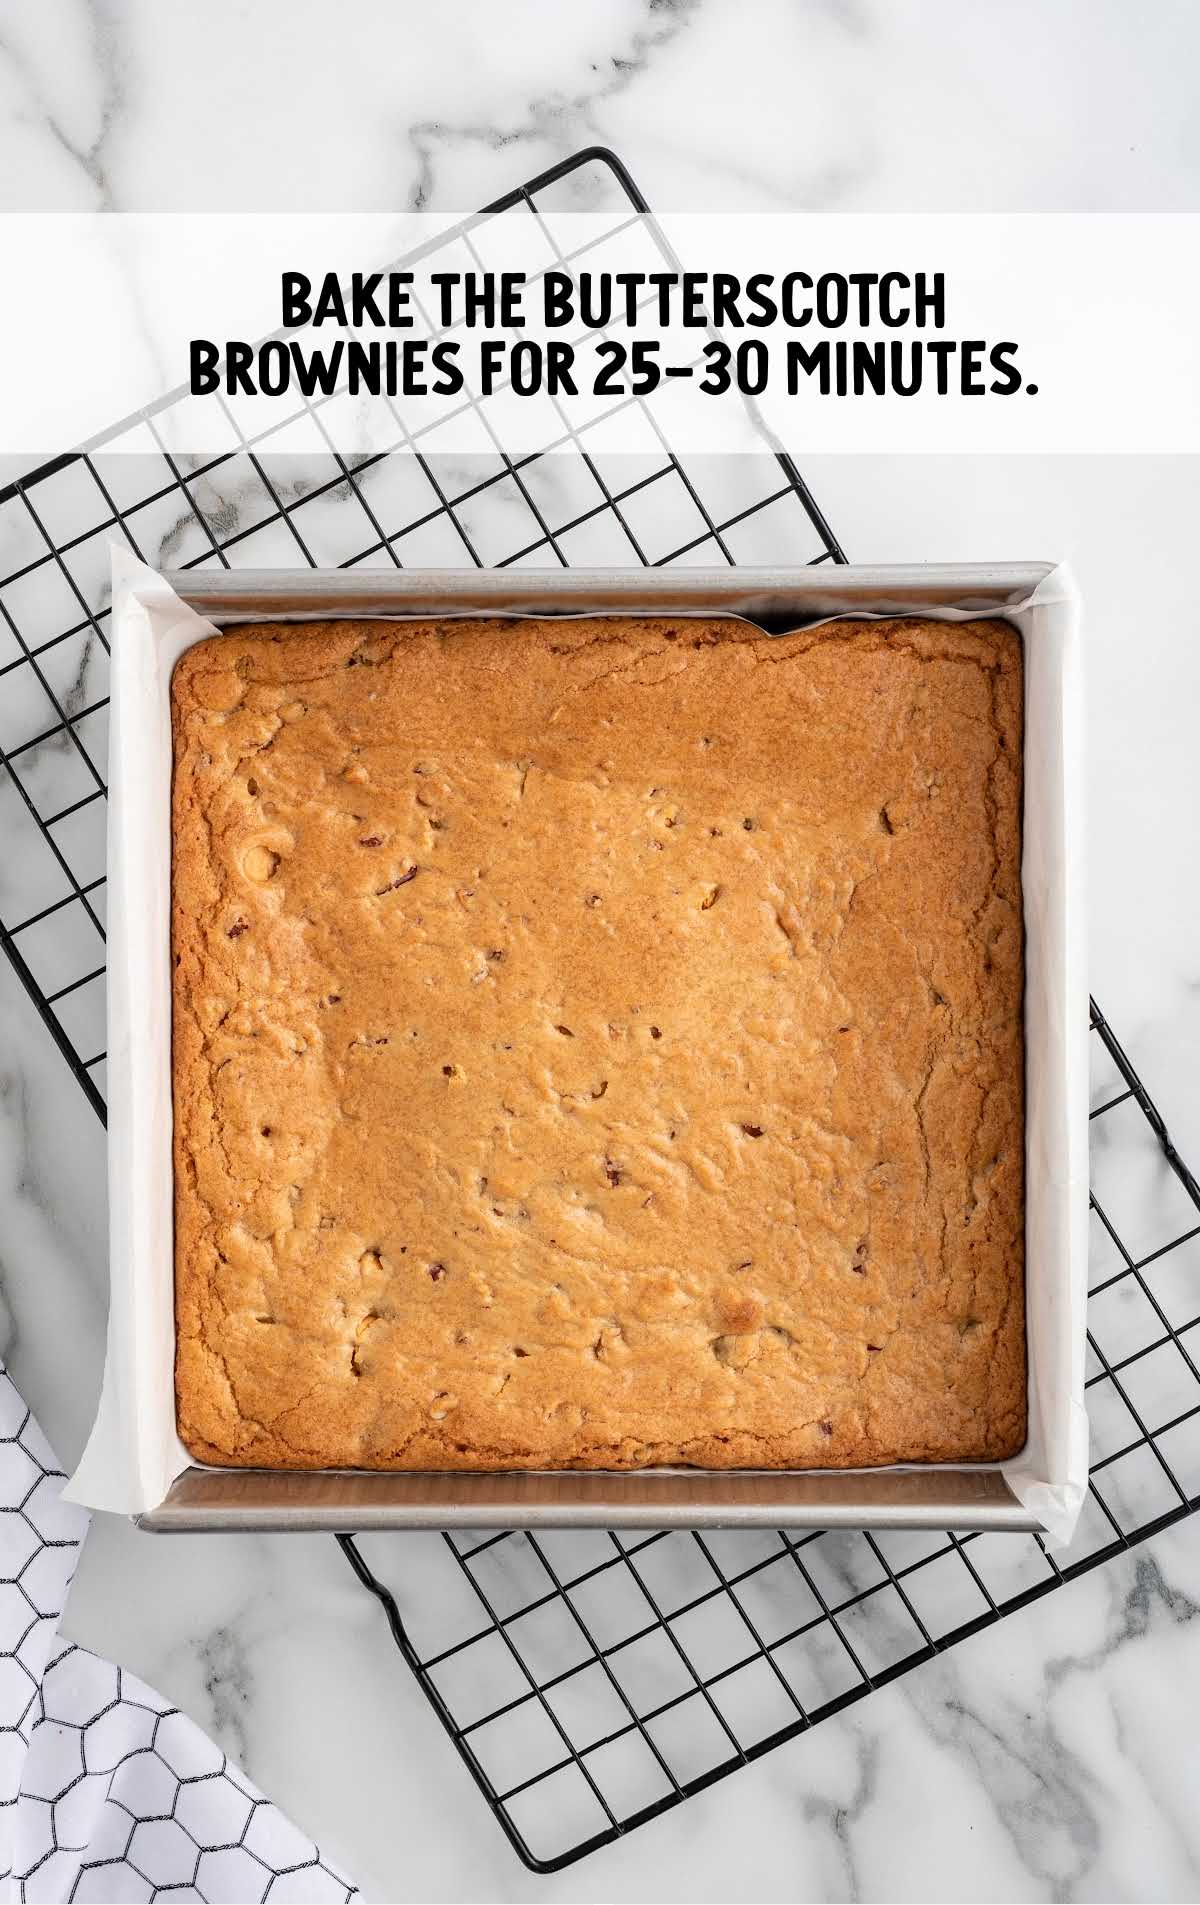 brownies baked in a baking pan